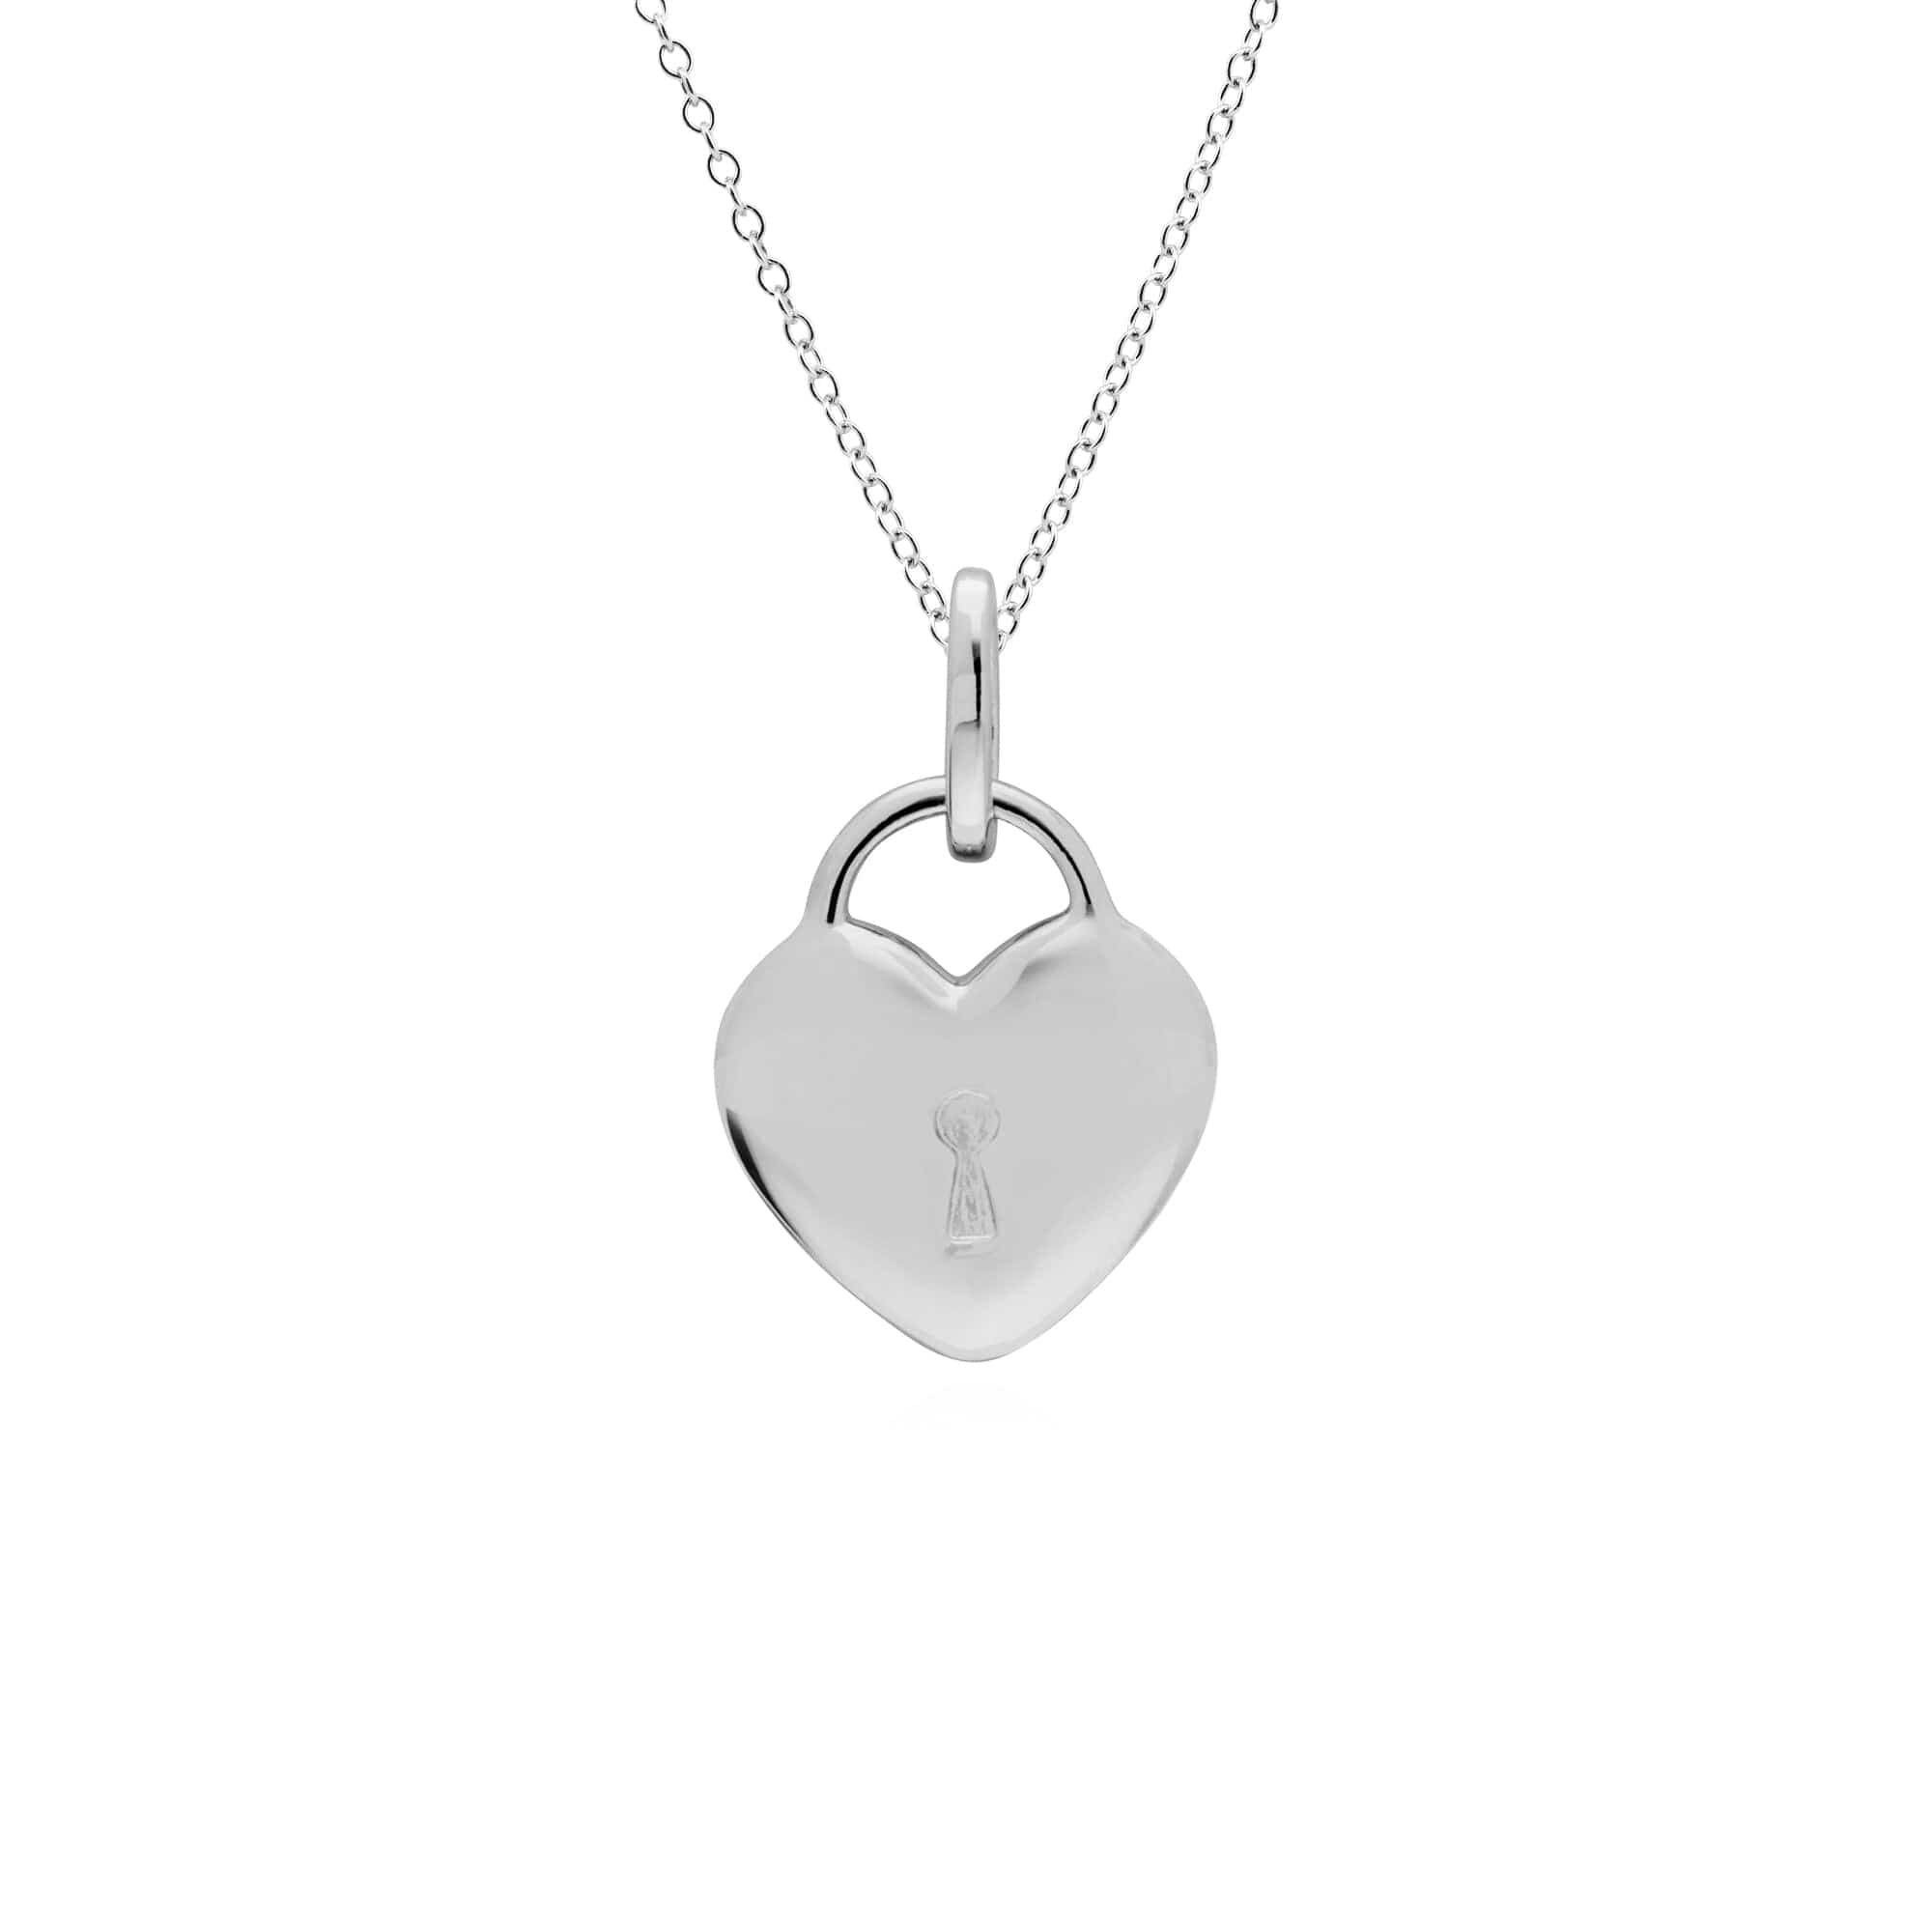 270P026813925-270P027001925 Classic Heart Lock Pendant & Aquamarine Big Key Charm in 925 Sterling Silver 3